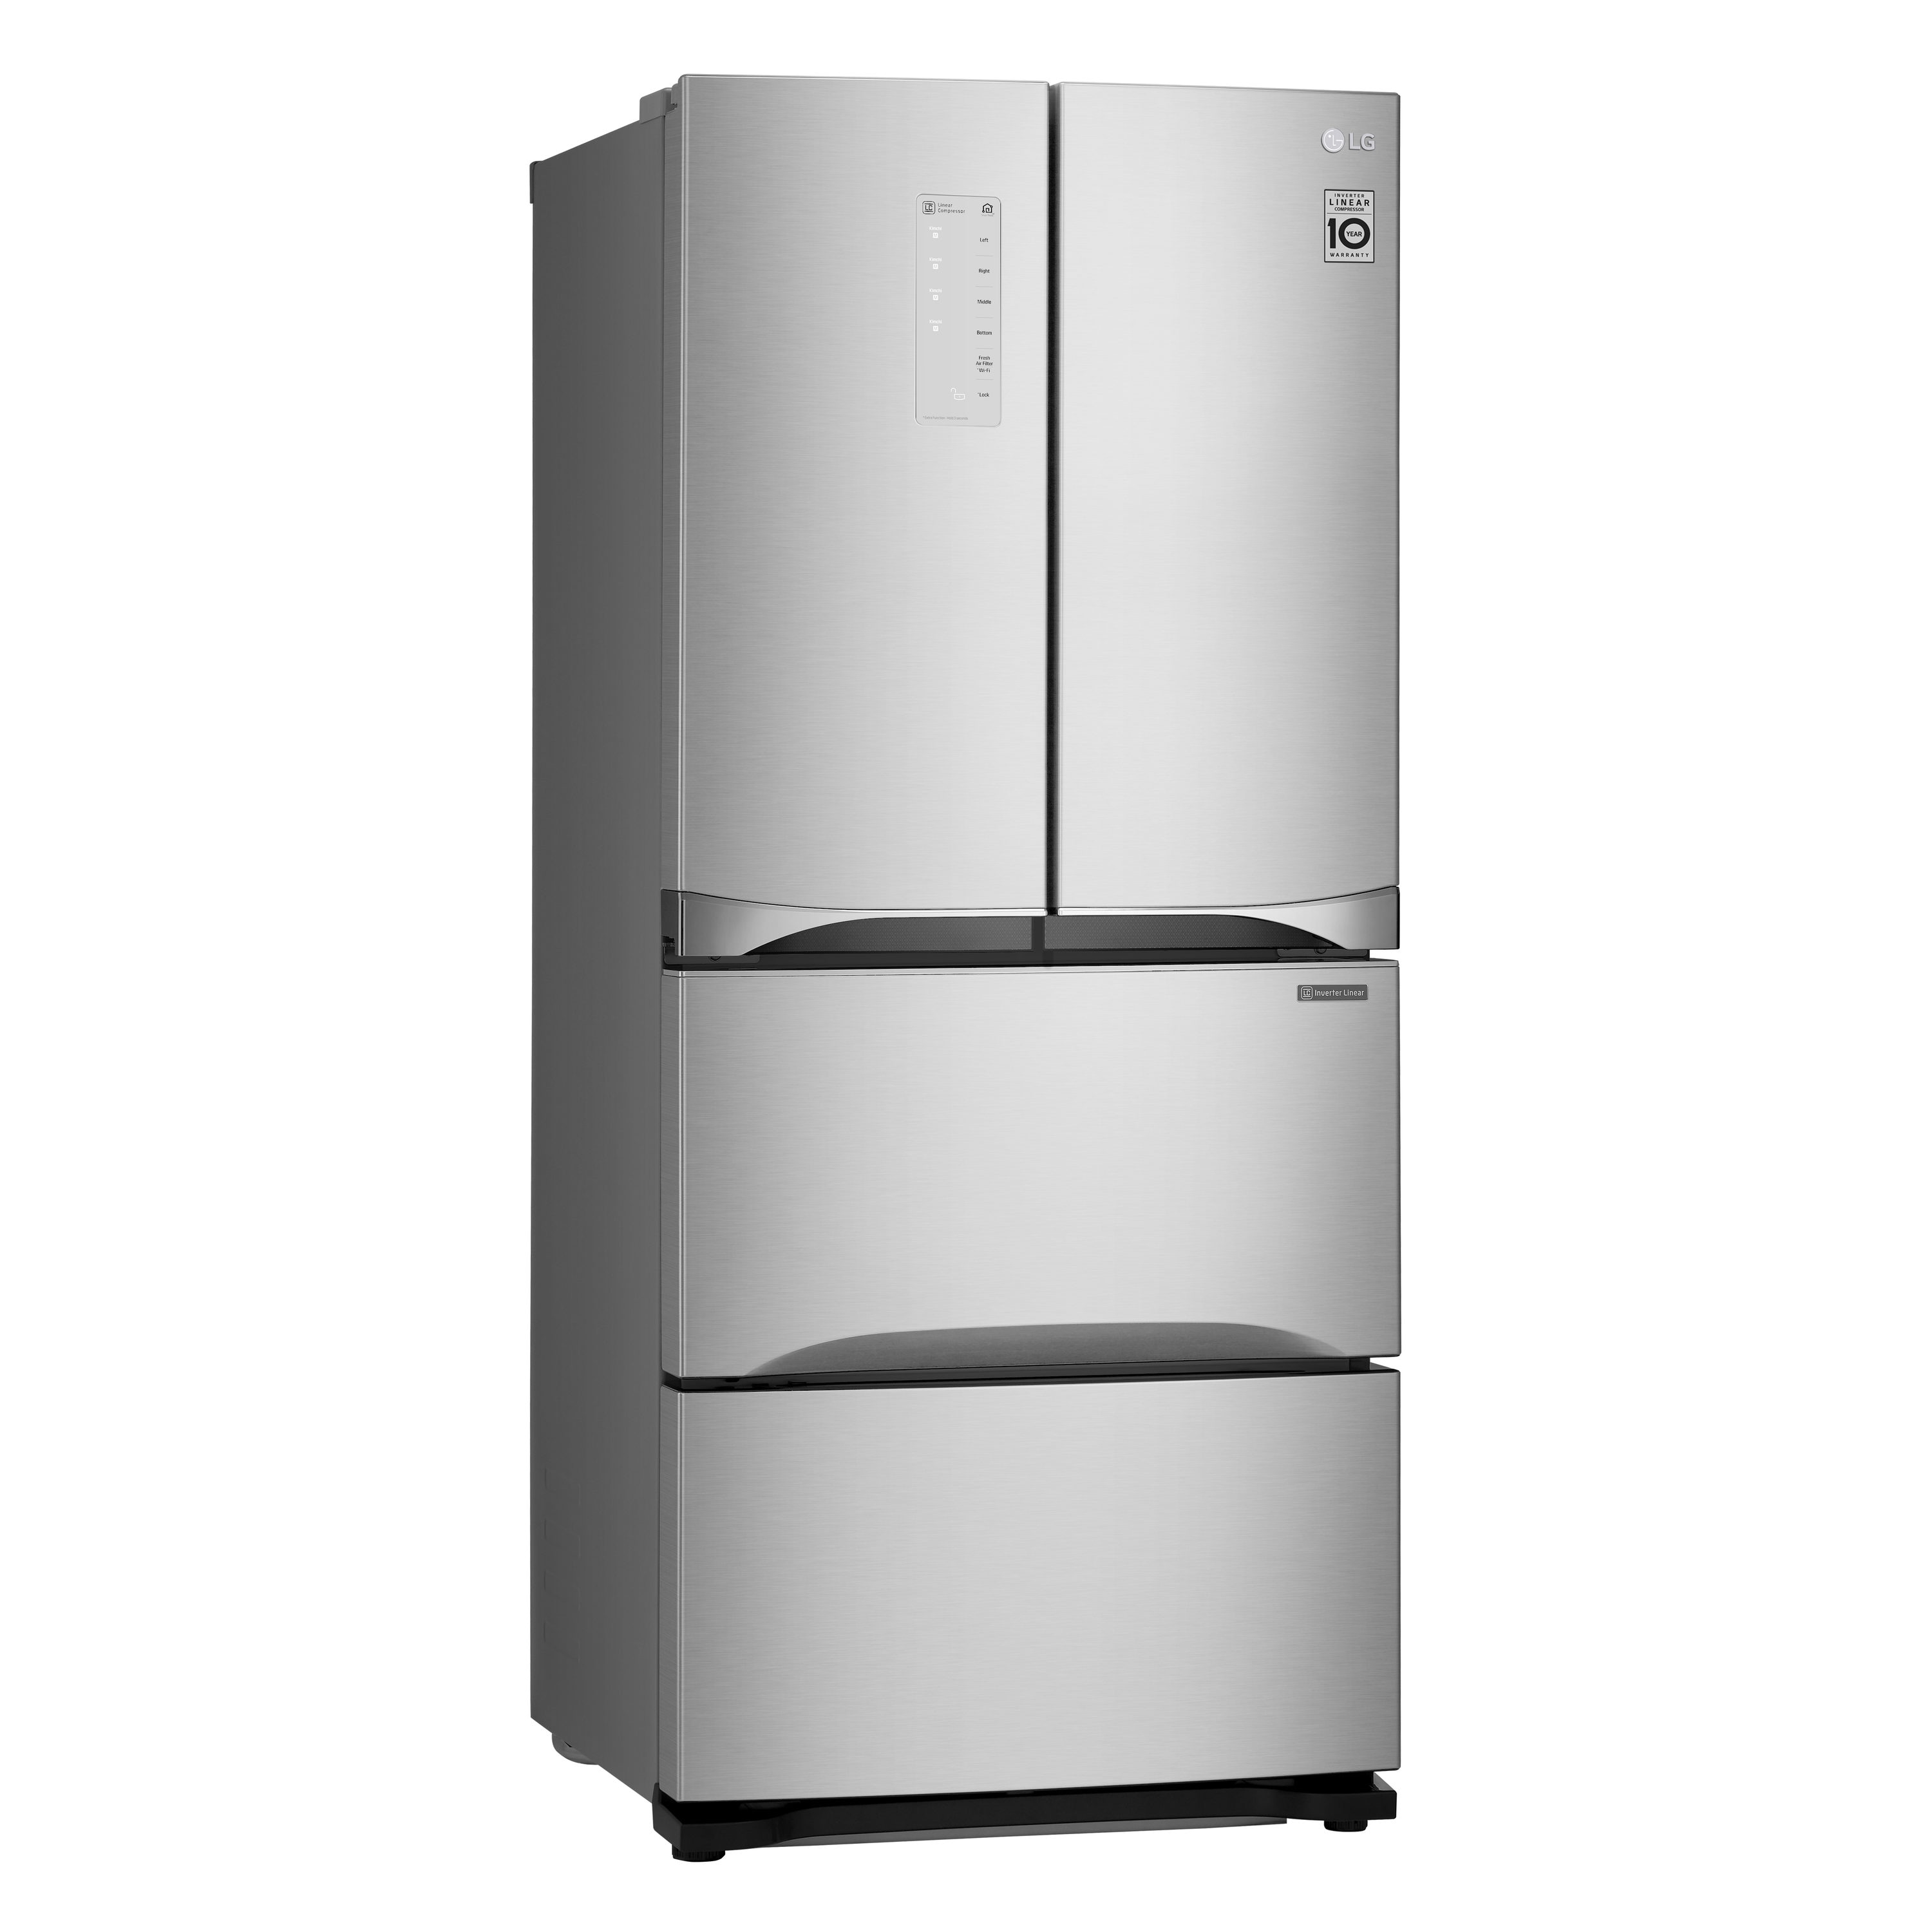 LG Kimchi Refrigerator 14.3 cu - Platinum Silver